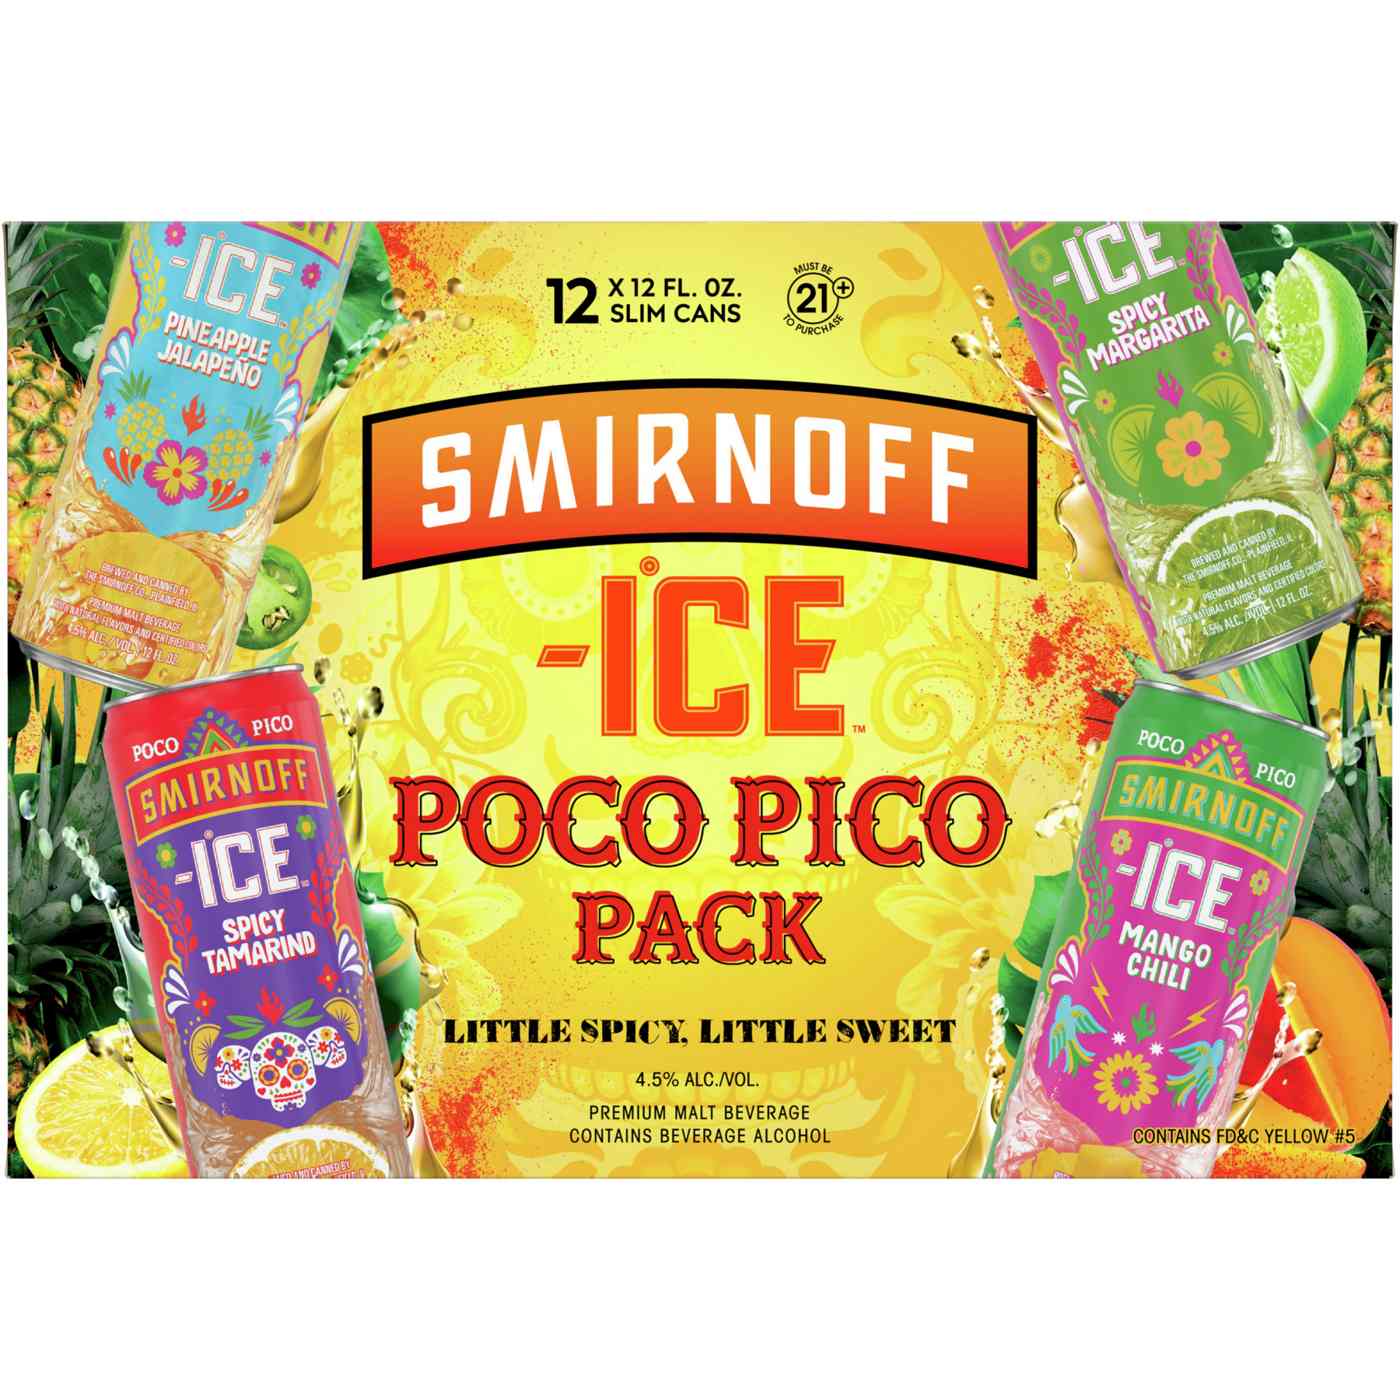 Smirnoff Ice Poco Pico; image 1 of 2